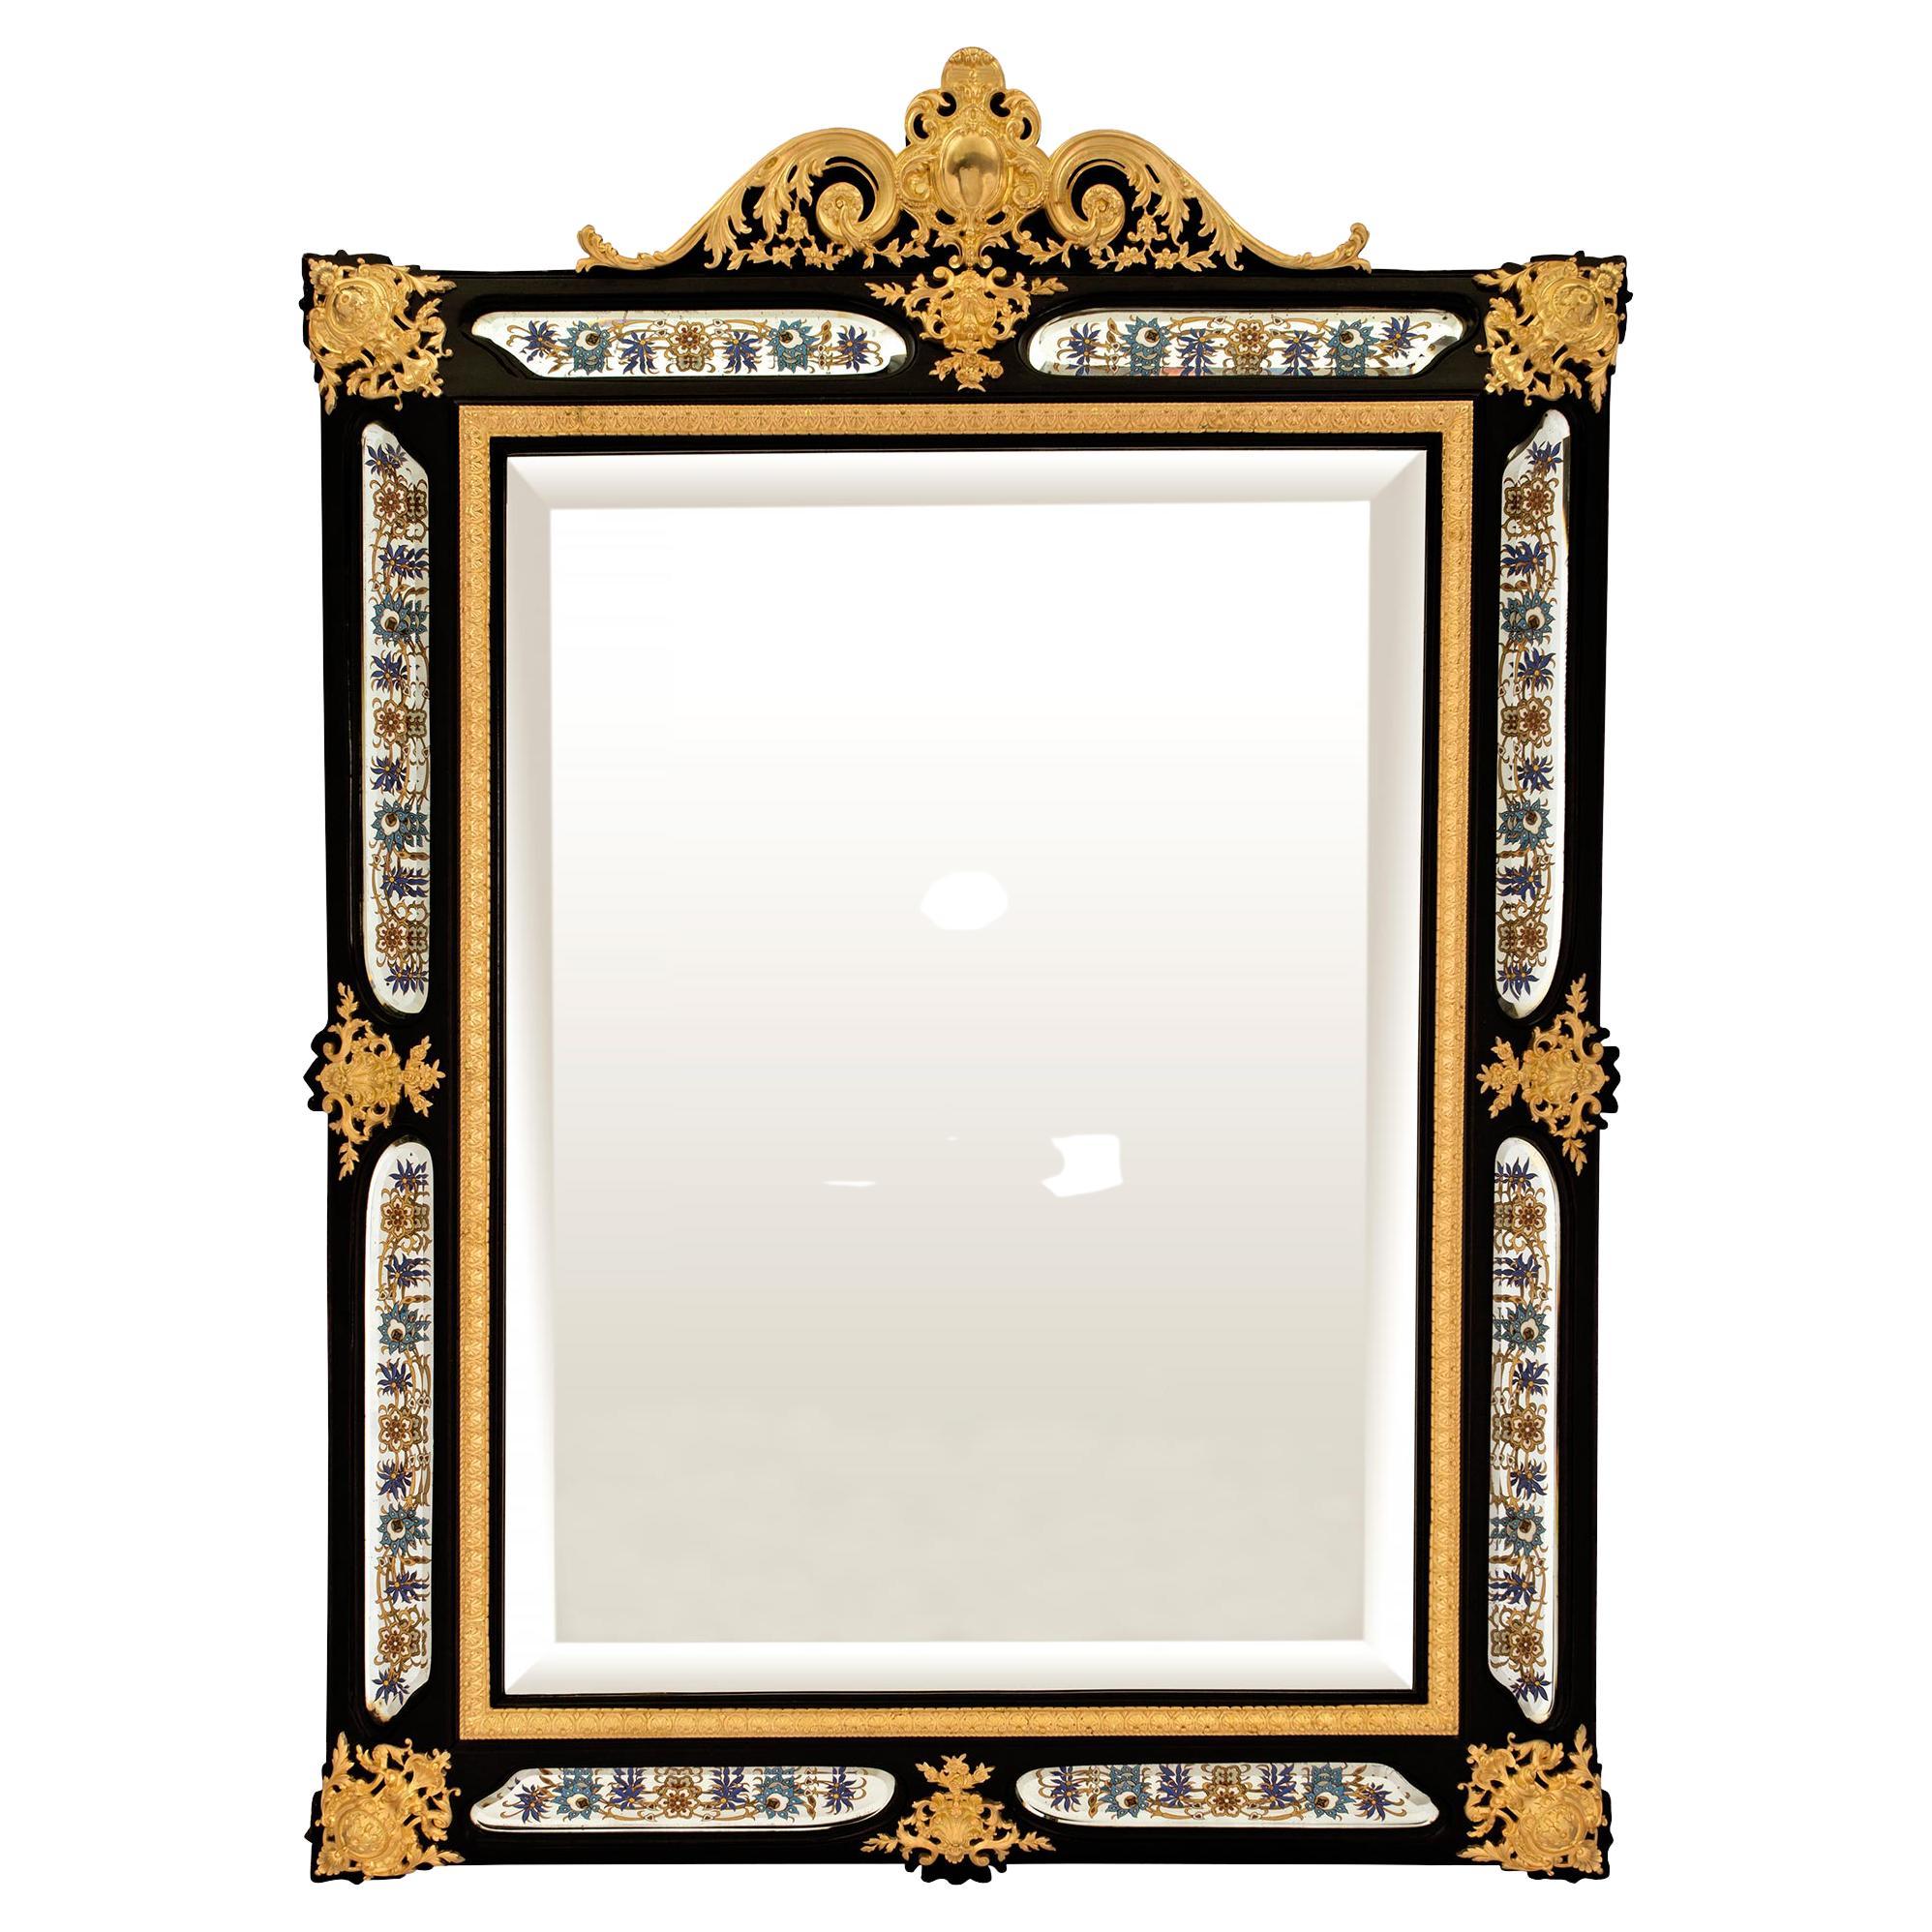 French Mid-19th Century Napoleon III Period Ebony and Ormolu Mirror For Sale